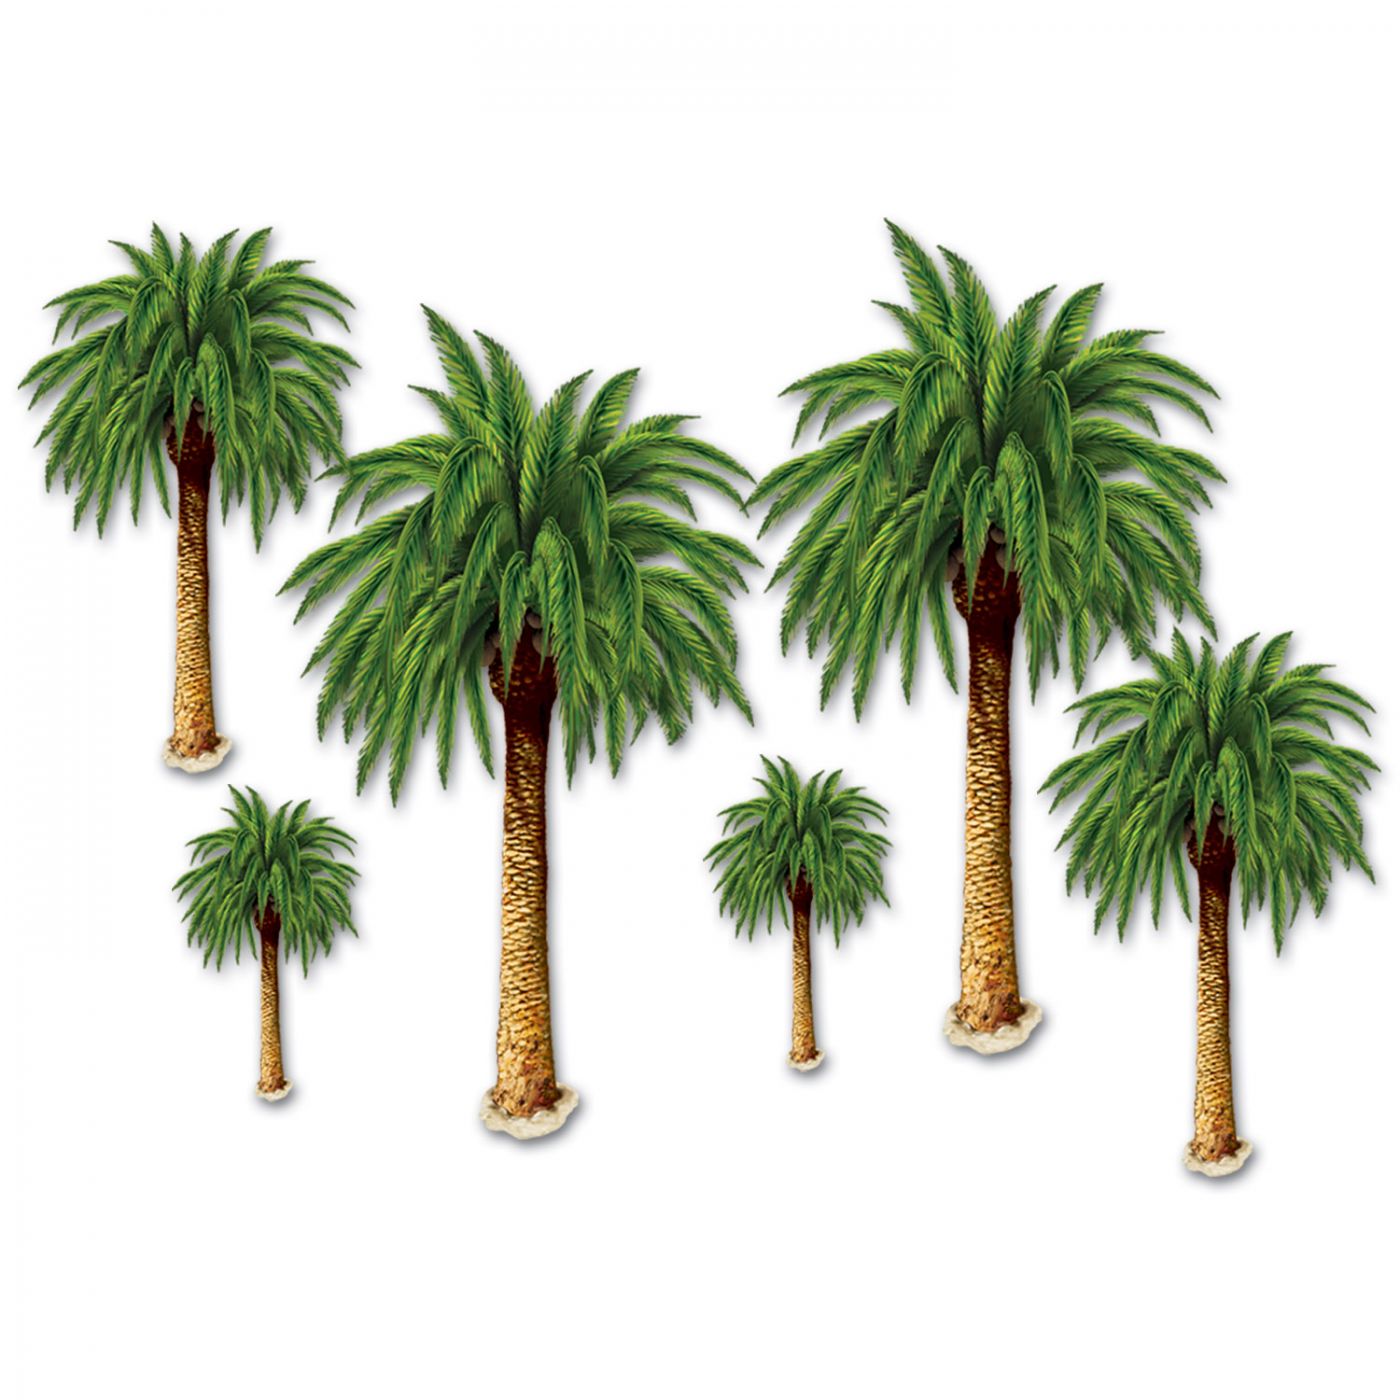 Palm Tree Props image